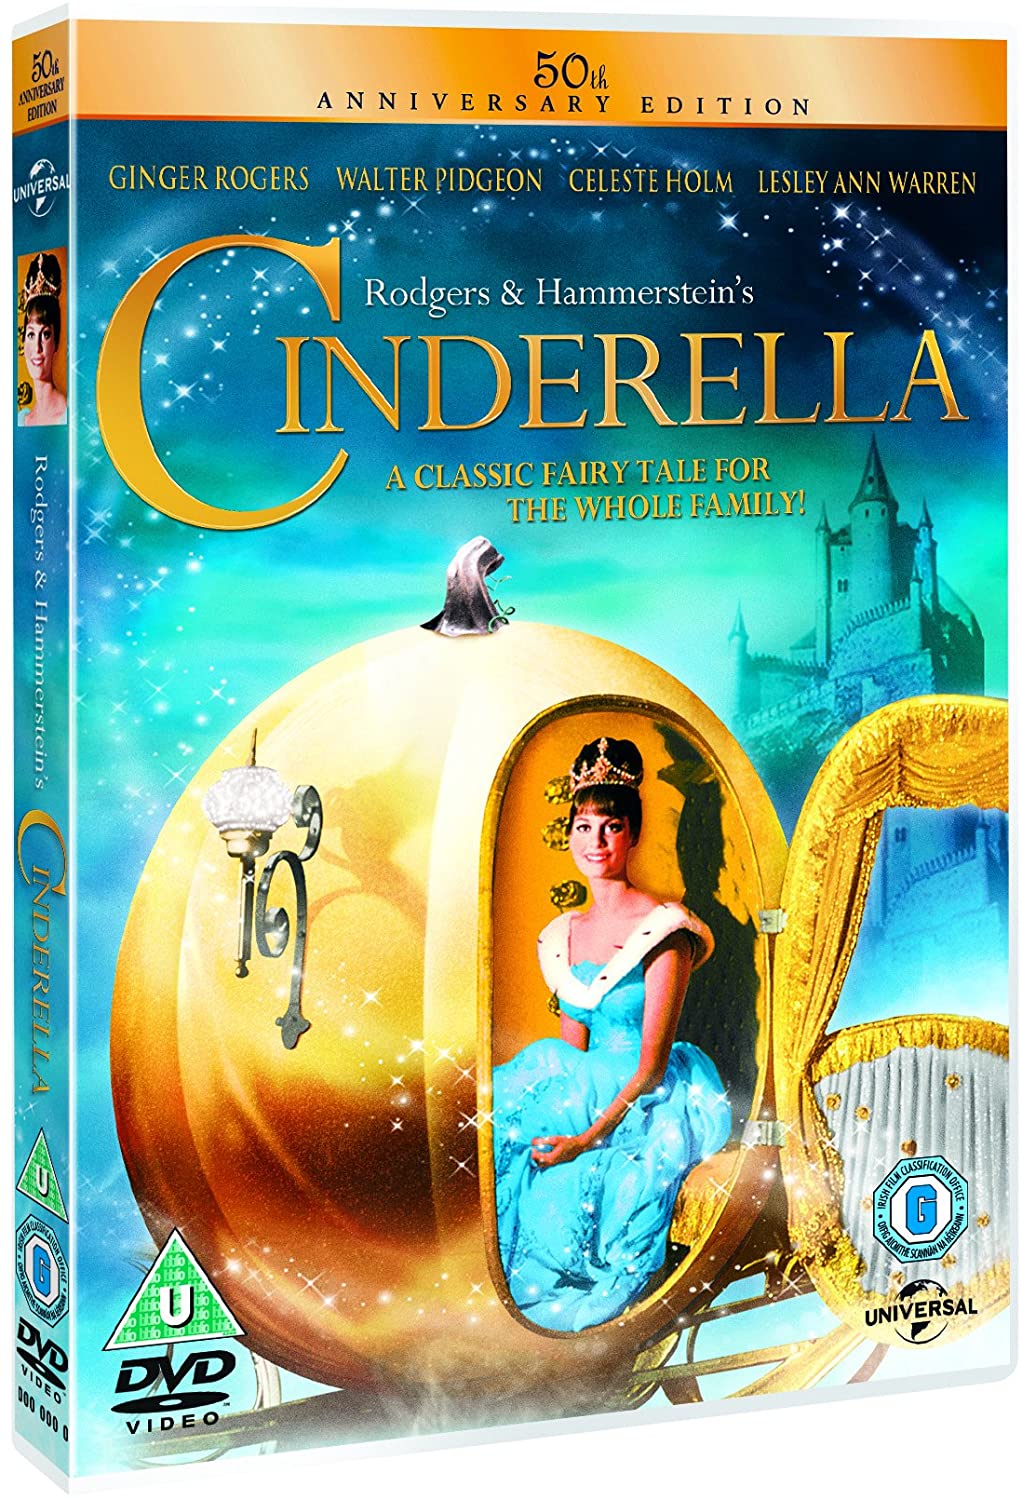 Cinderella [DVD] [1964] - Romance/Family [DVD]